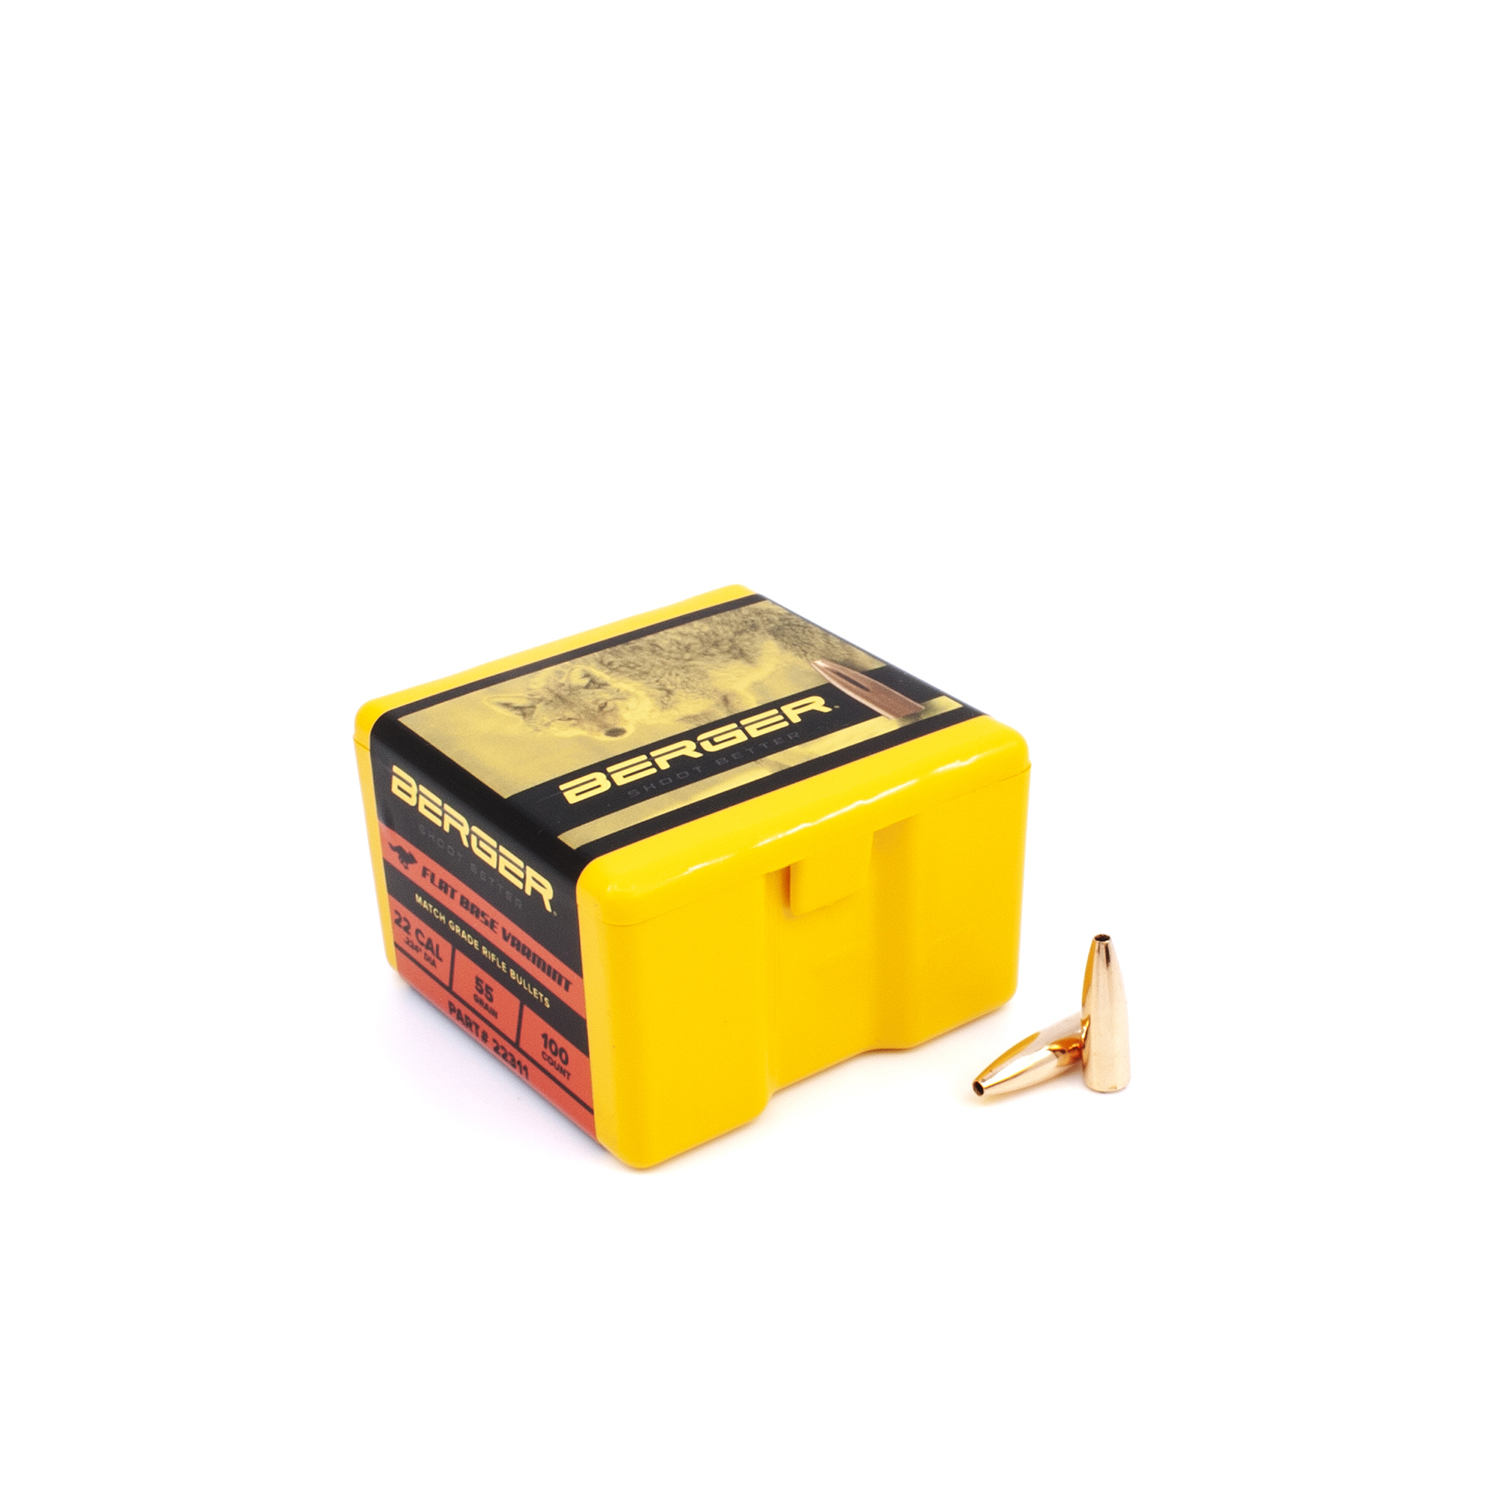 Berger Bullets - .22 cal, 55 gr. Varmint Flat Base - Box of 100